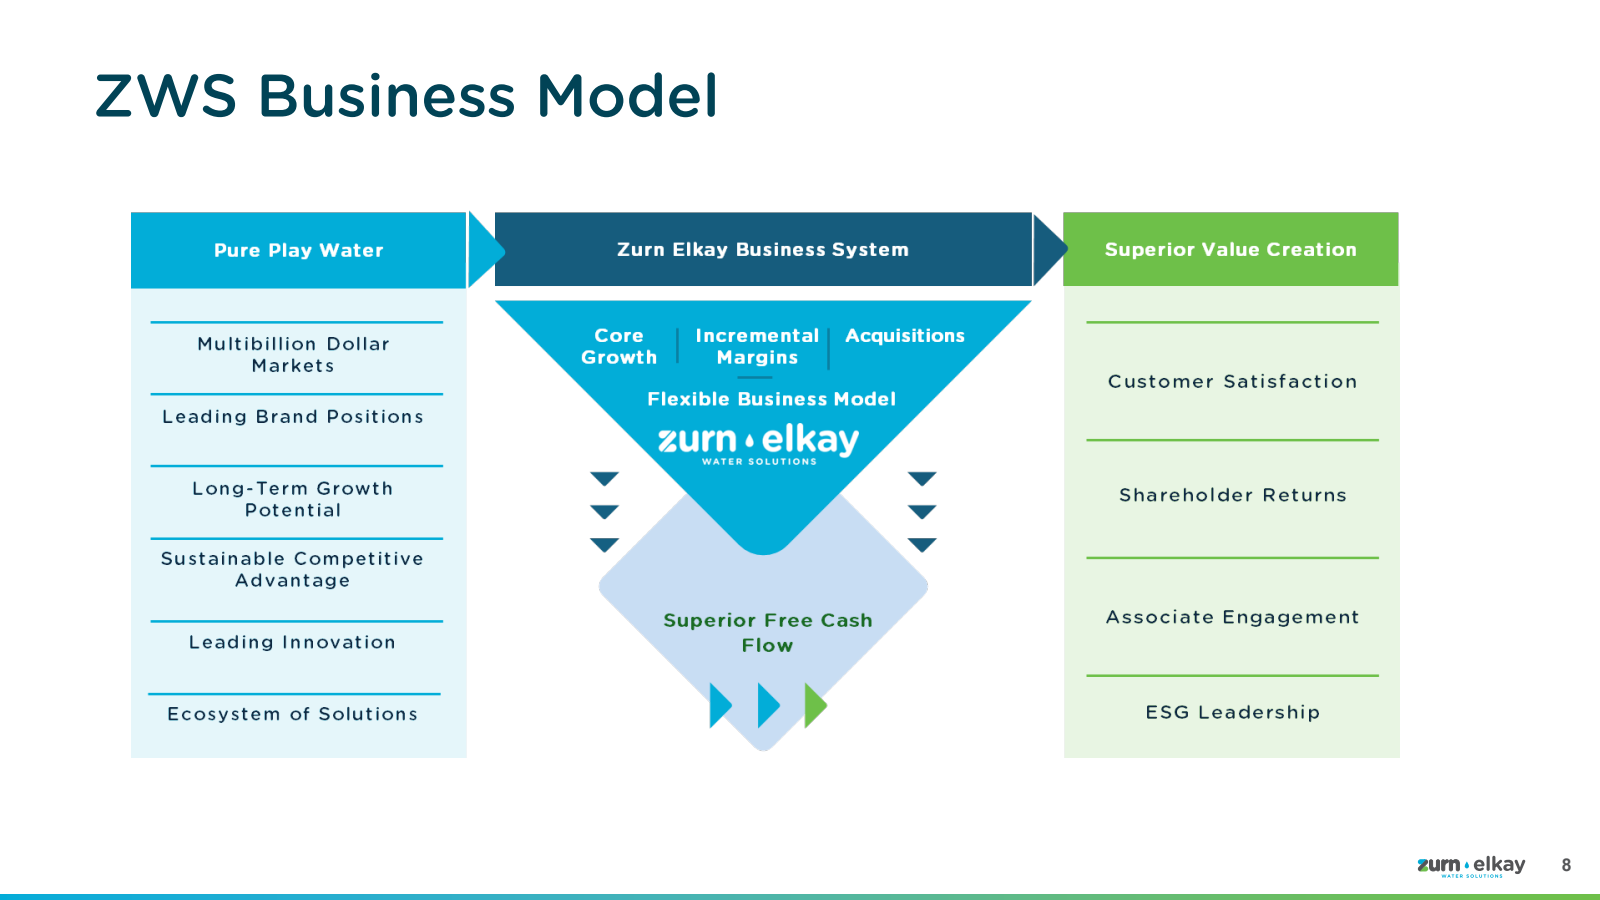 ZWS Business Model 
